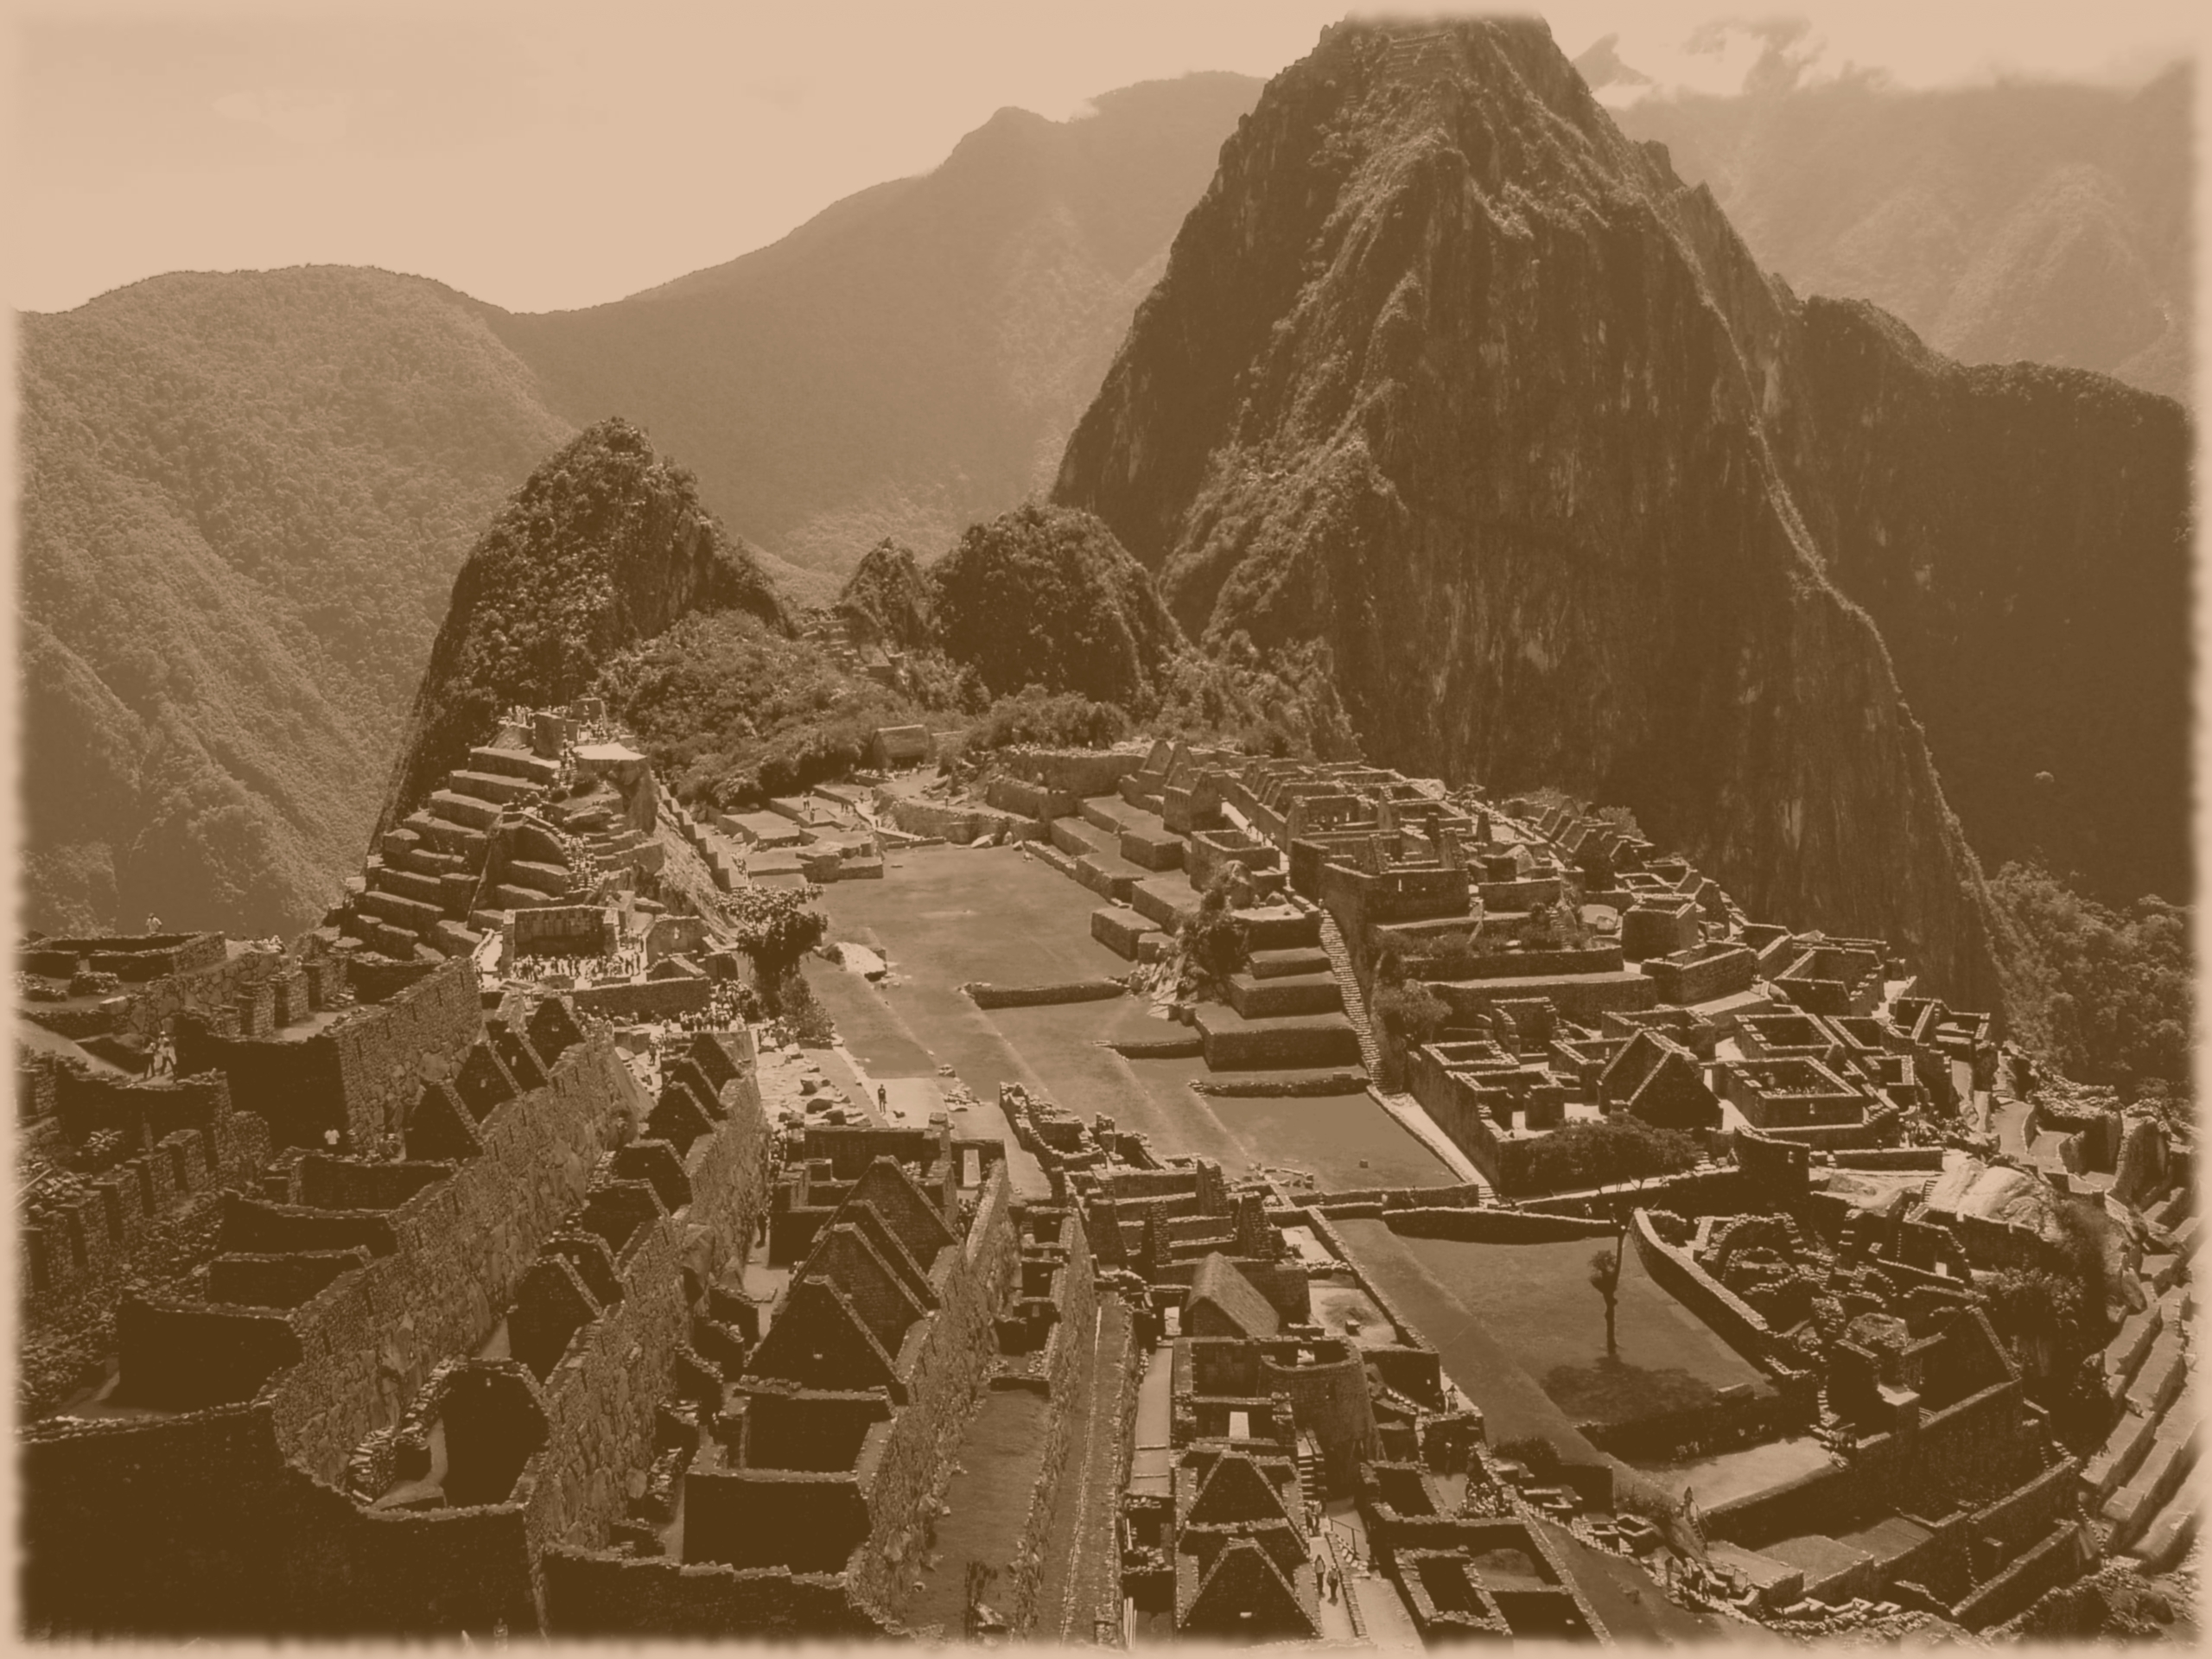 Inca ruins amidst picturesque Peruvian landscape